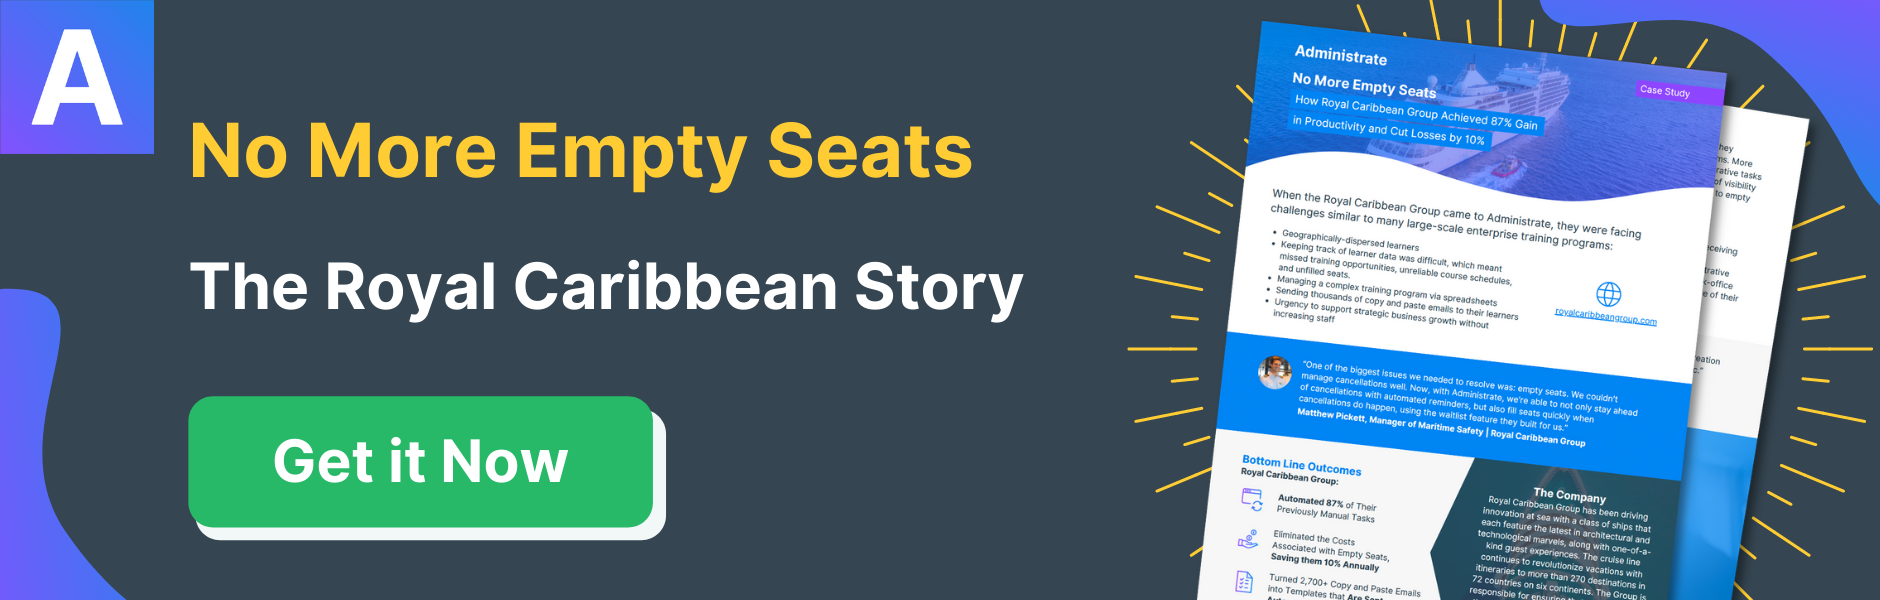 The Royal Caribbean Story - No More Empty Seats